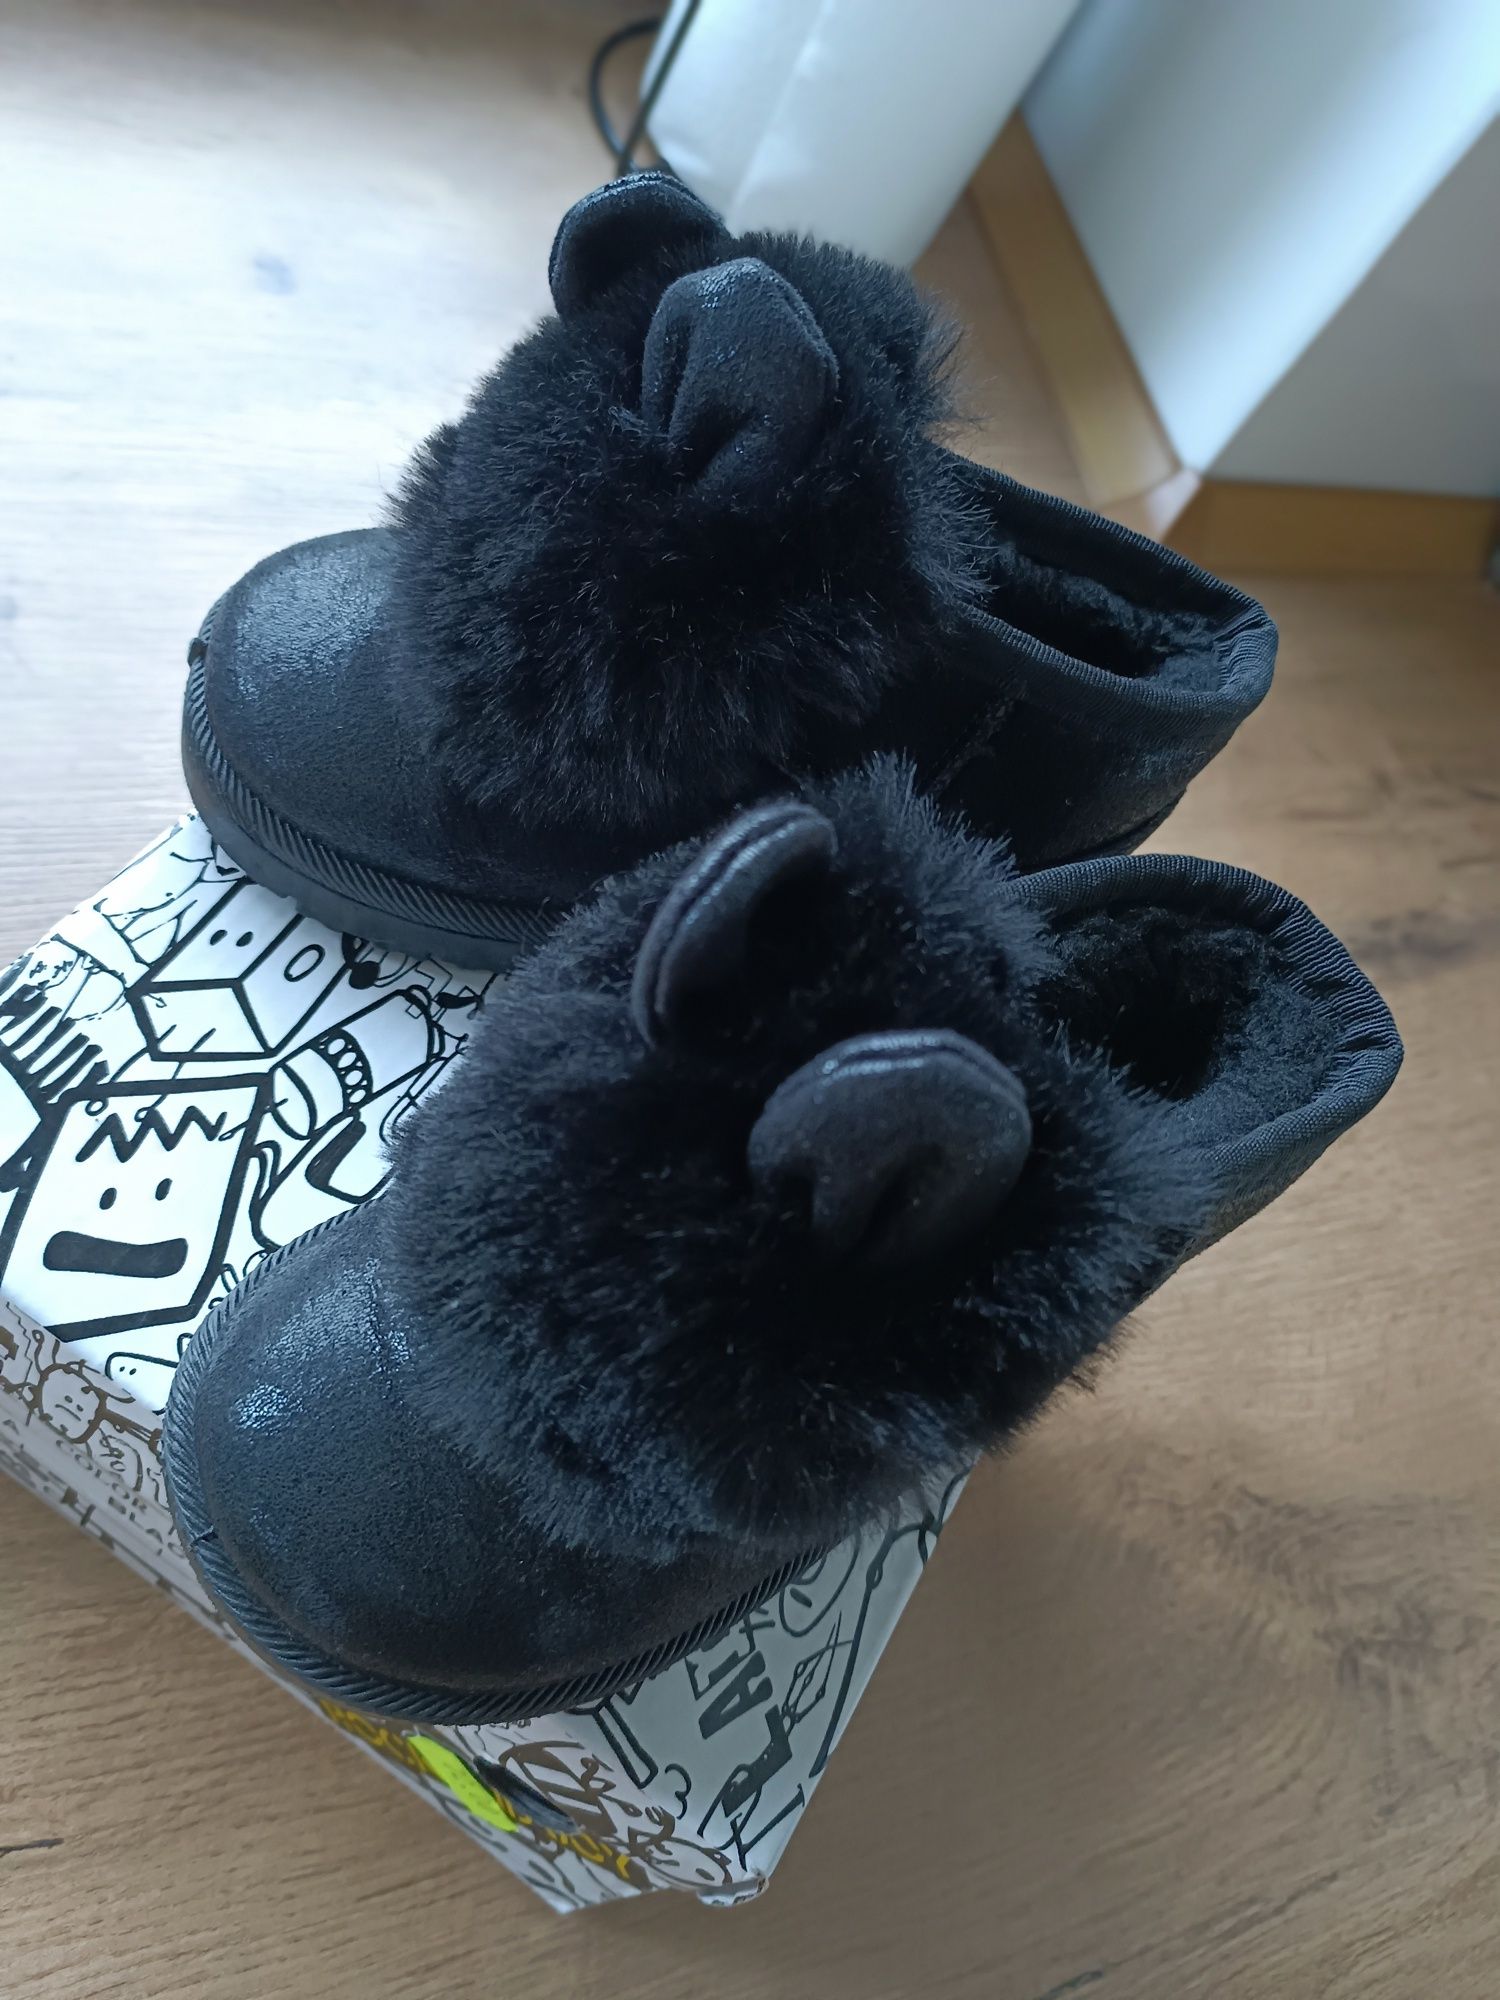 Botki emu ciepłe czarne kozaki 22 buty buciki